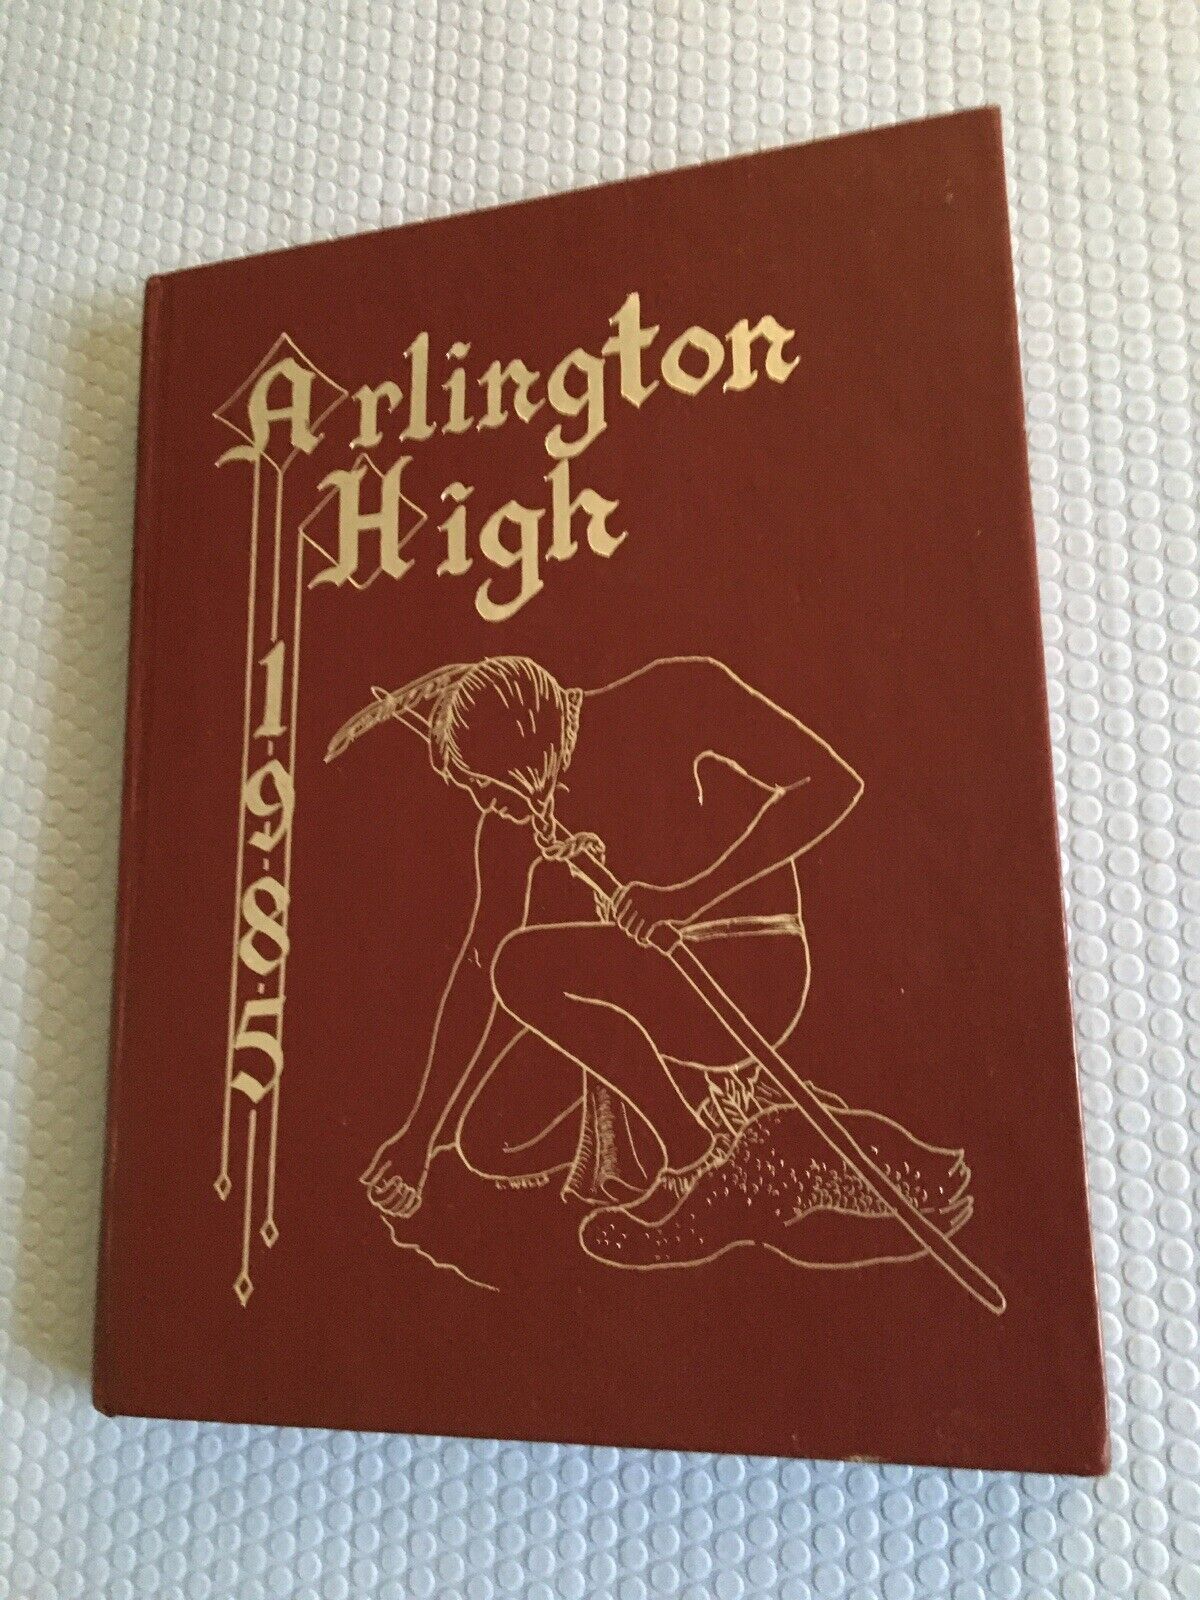 1985 High School Yearbook Arlington High Massachusetts